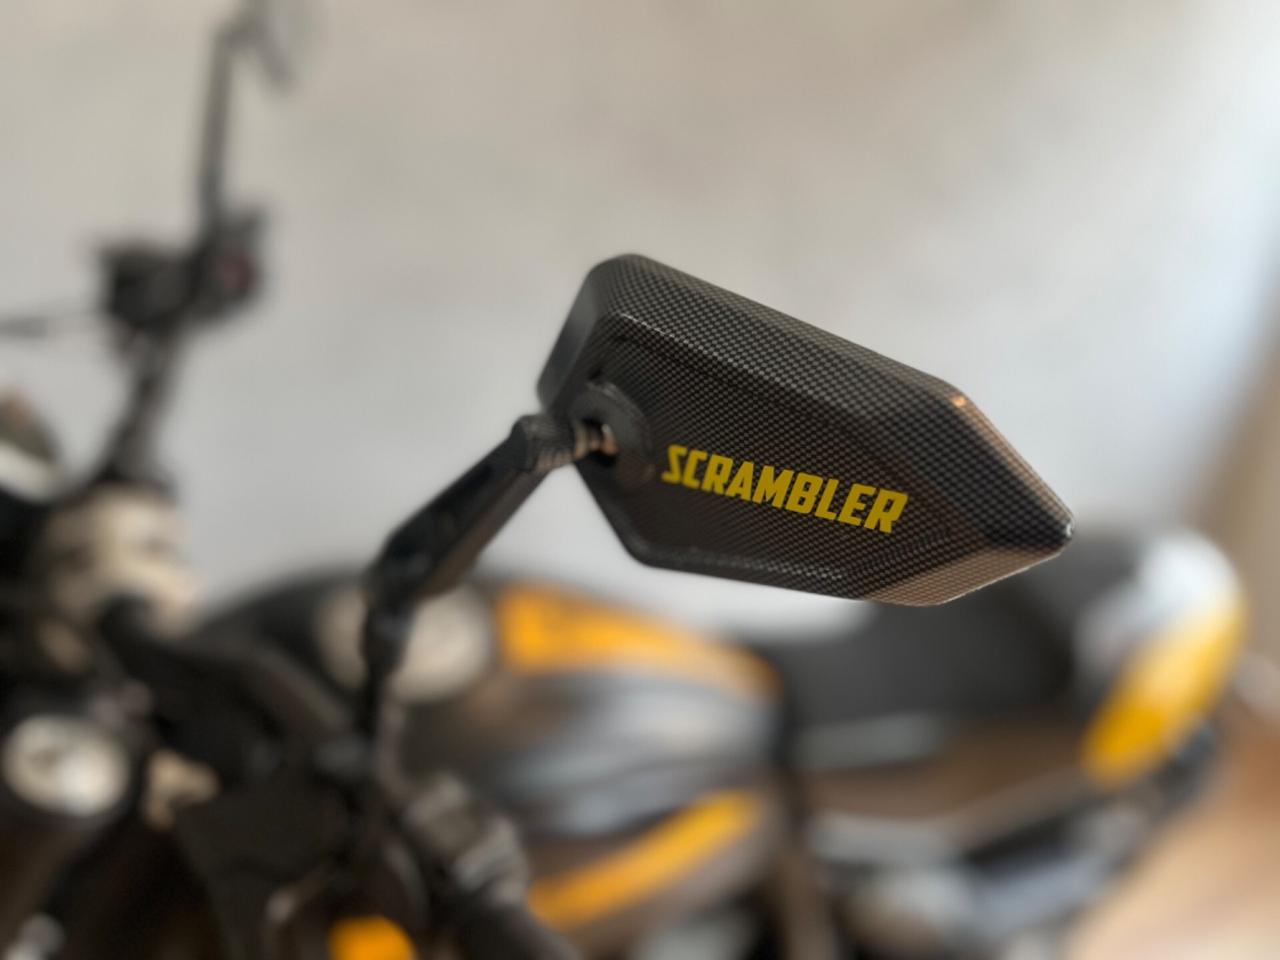 Ducati Scrambler Full throttle